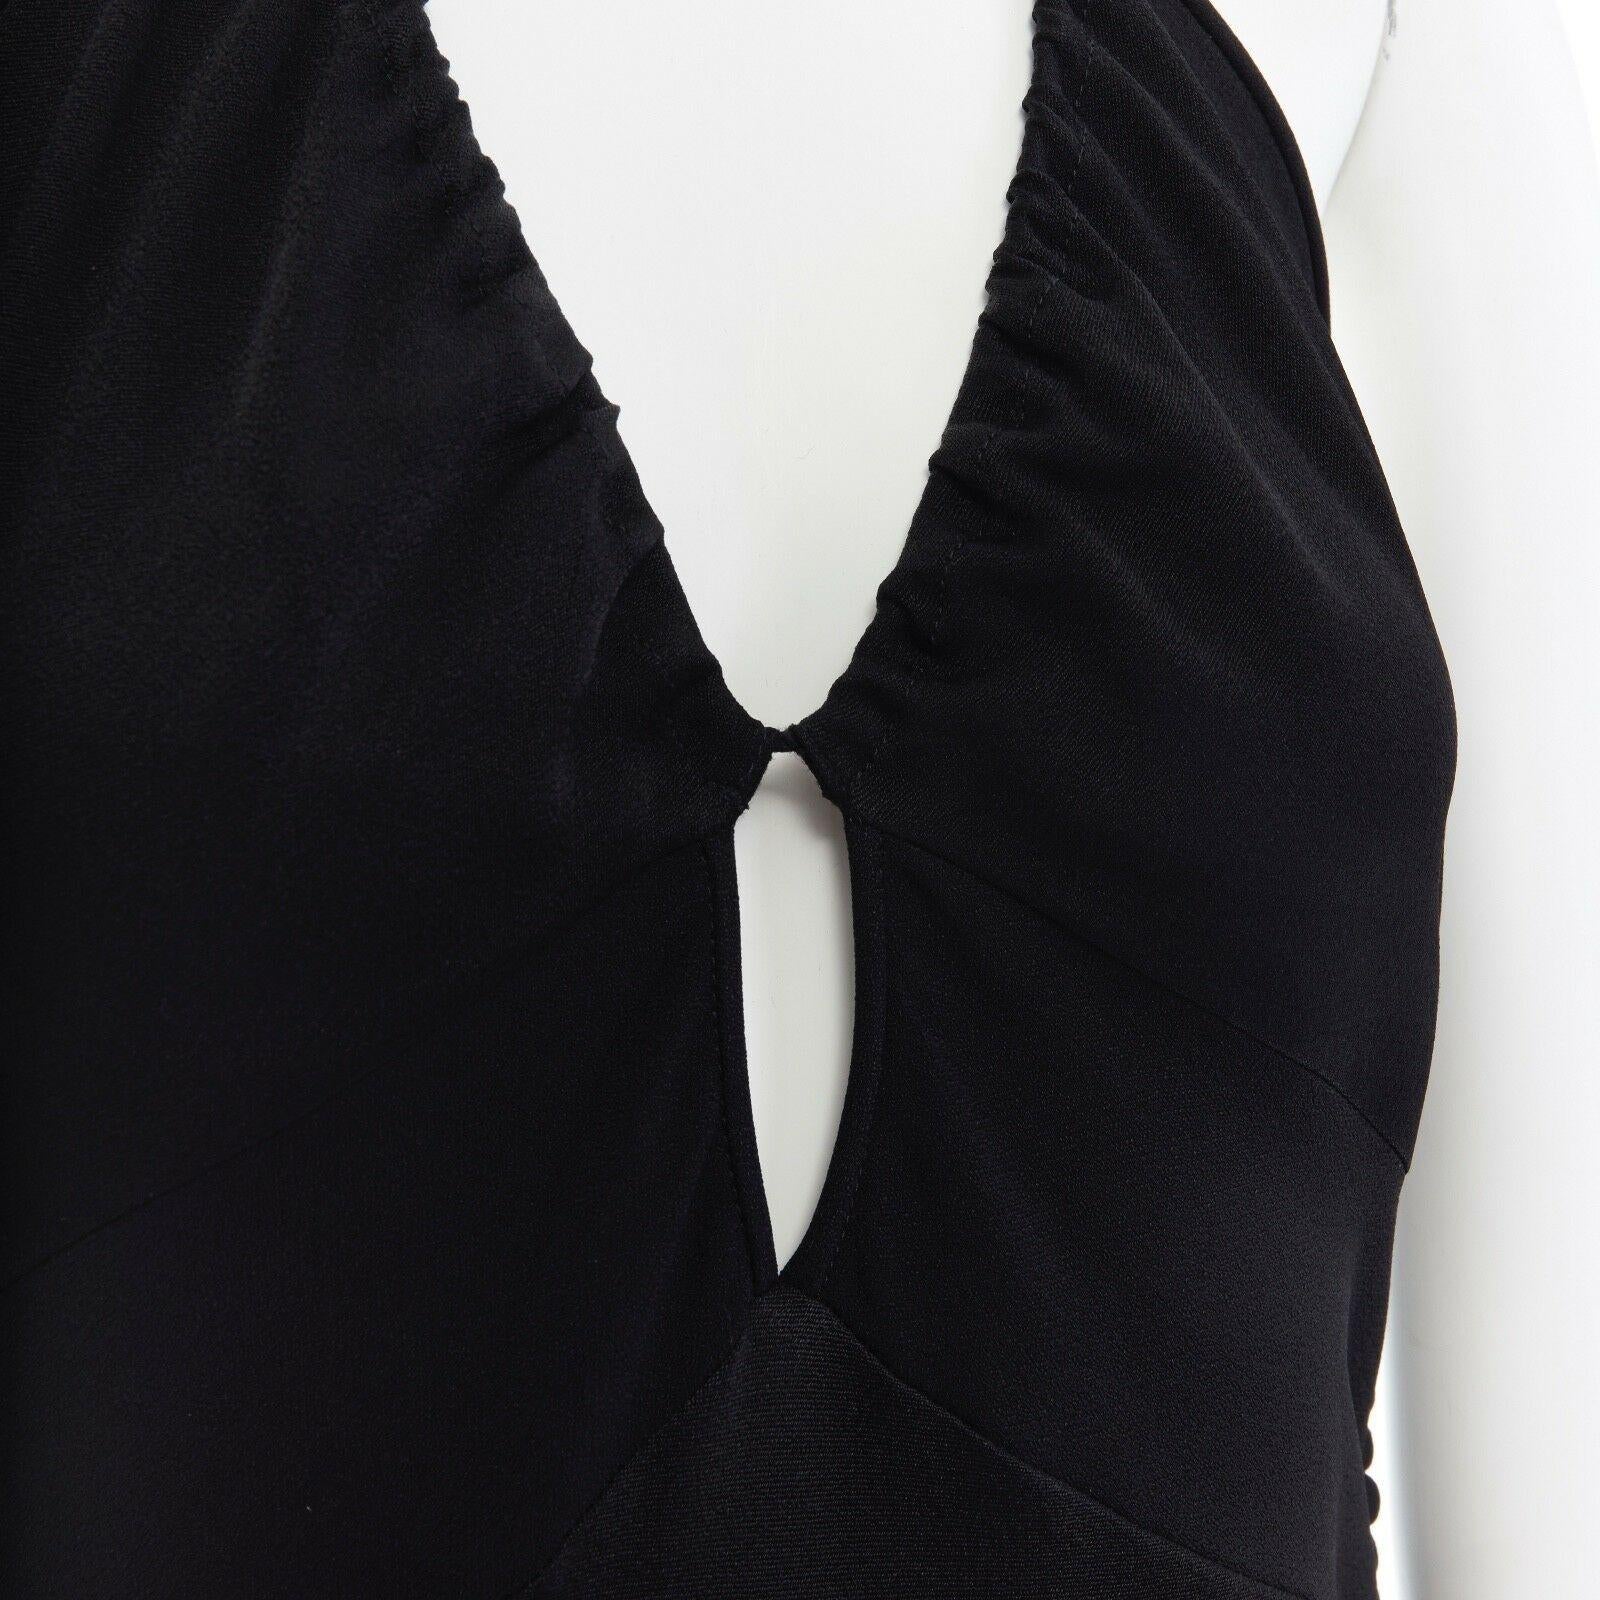 CHRISTIAN DIOR GALLIANO black halter keyhole backless dress gown FR40 US8 UK12 L 2